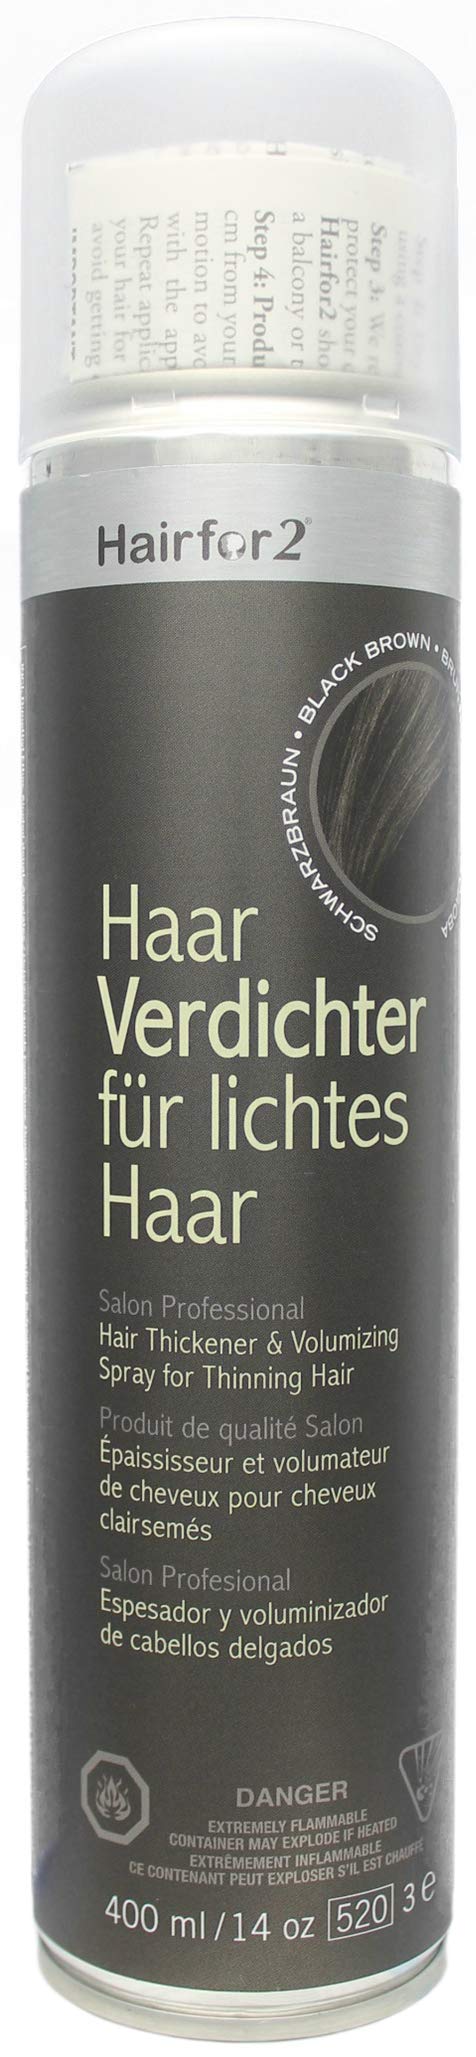 Hairfor2 Haarverdichtungsspray gegen lichtes Haar | Haarpuder | Streuhaar | Haarauffüller | Haarausfall | Haarverdichter (400ml, Schwarzbraun)